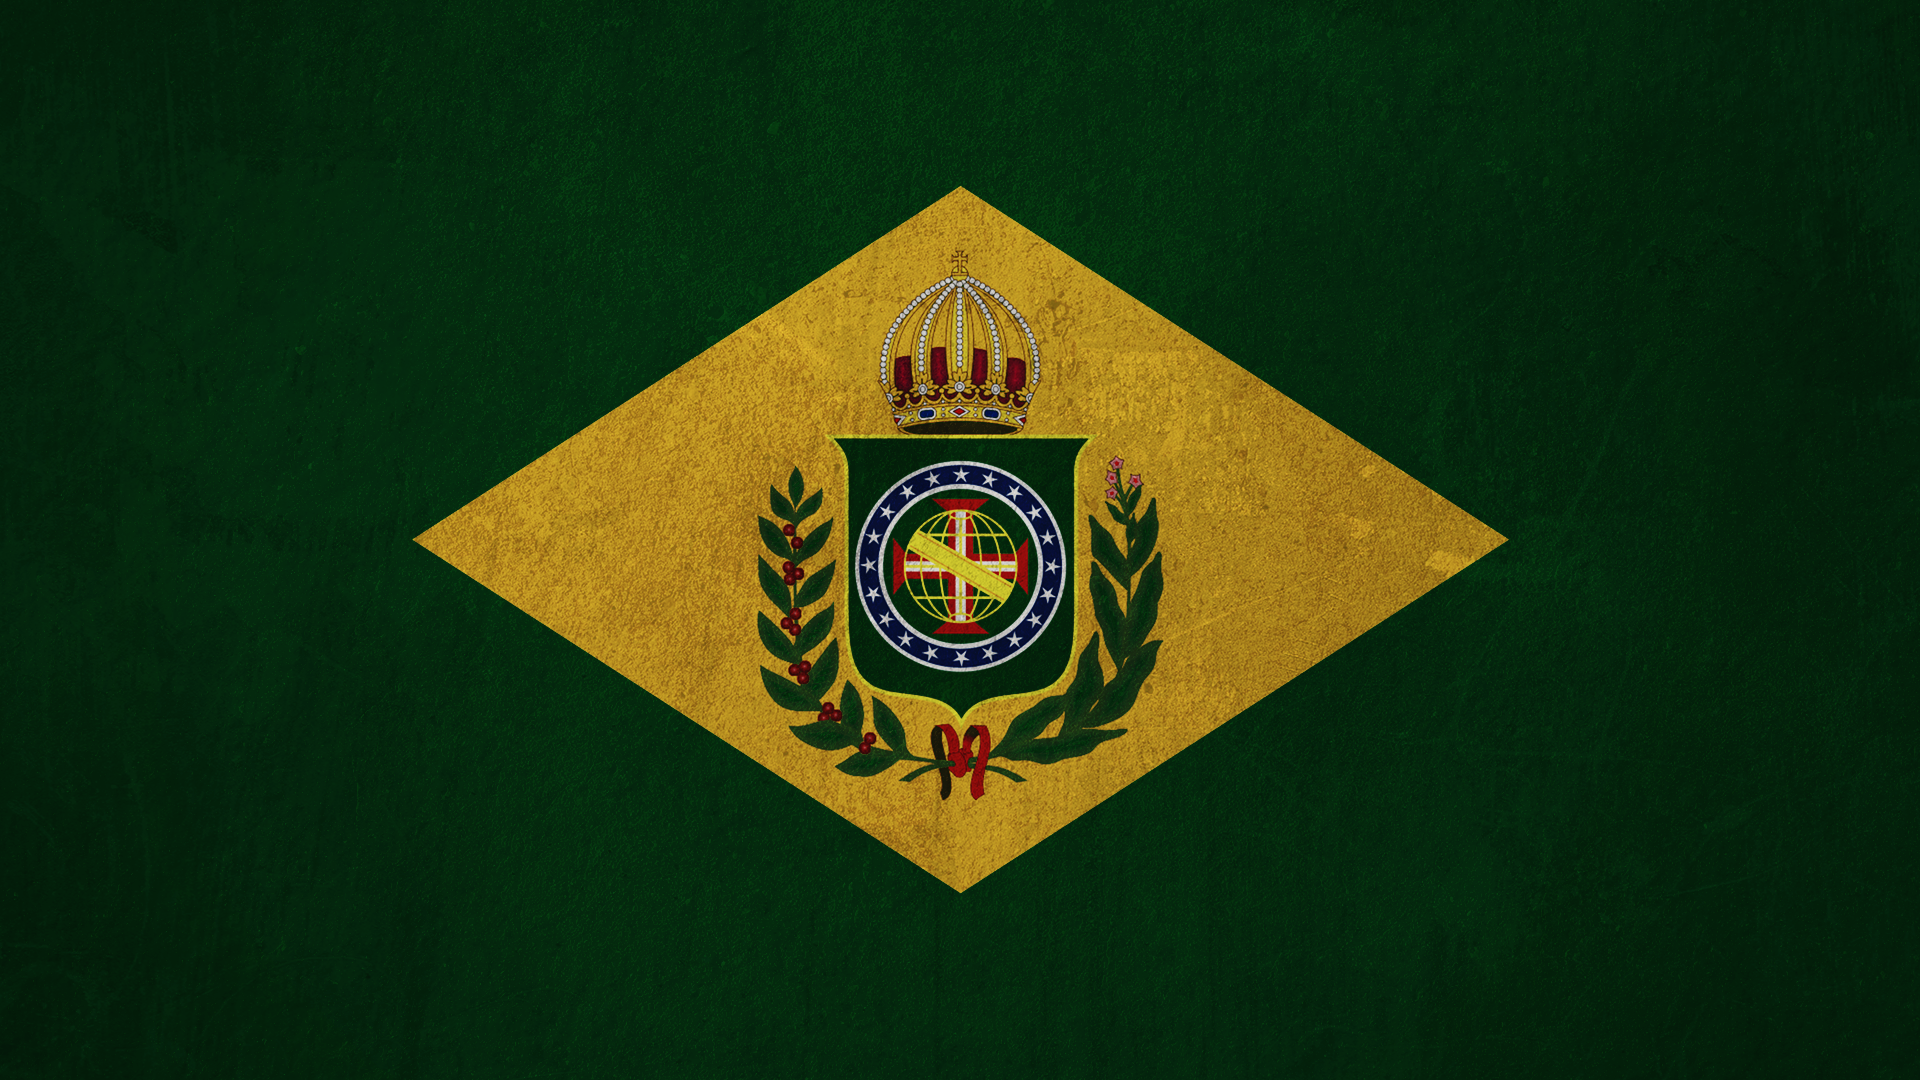 General 1920x1080 Brazil flag green yellow